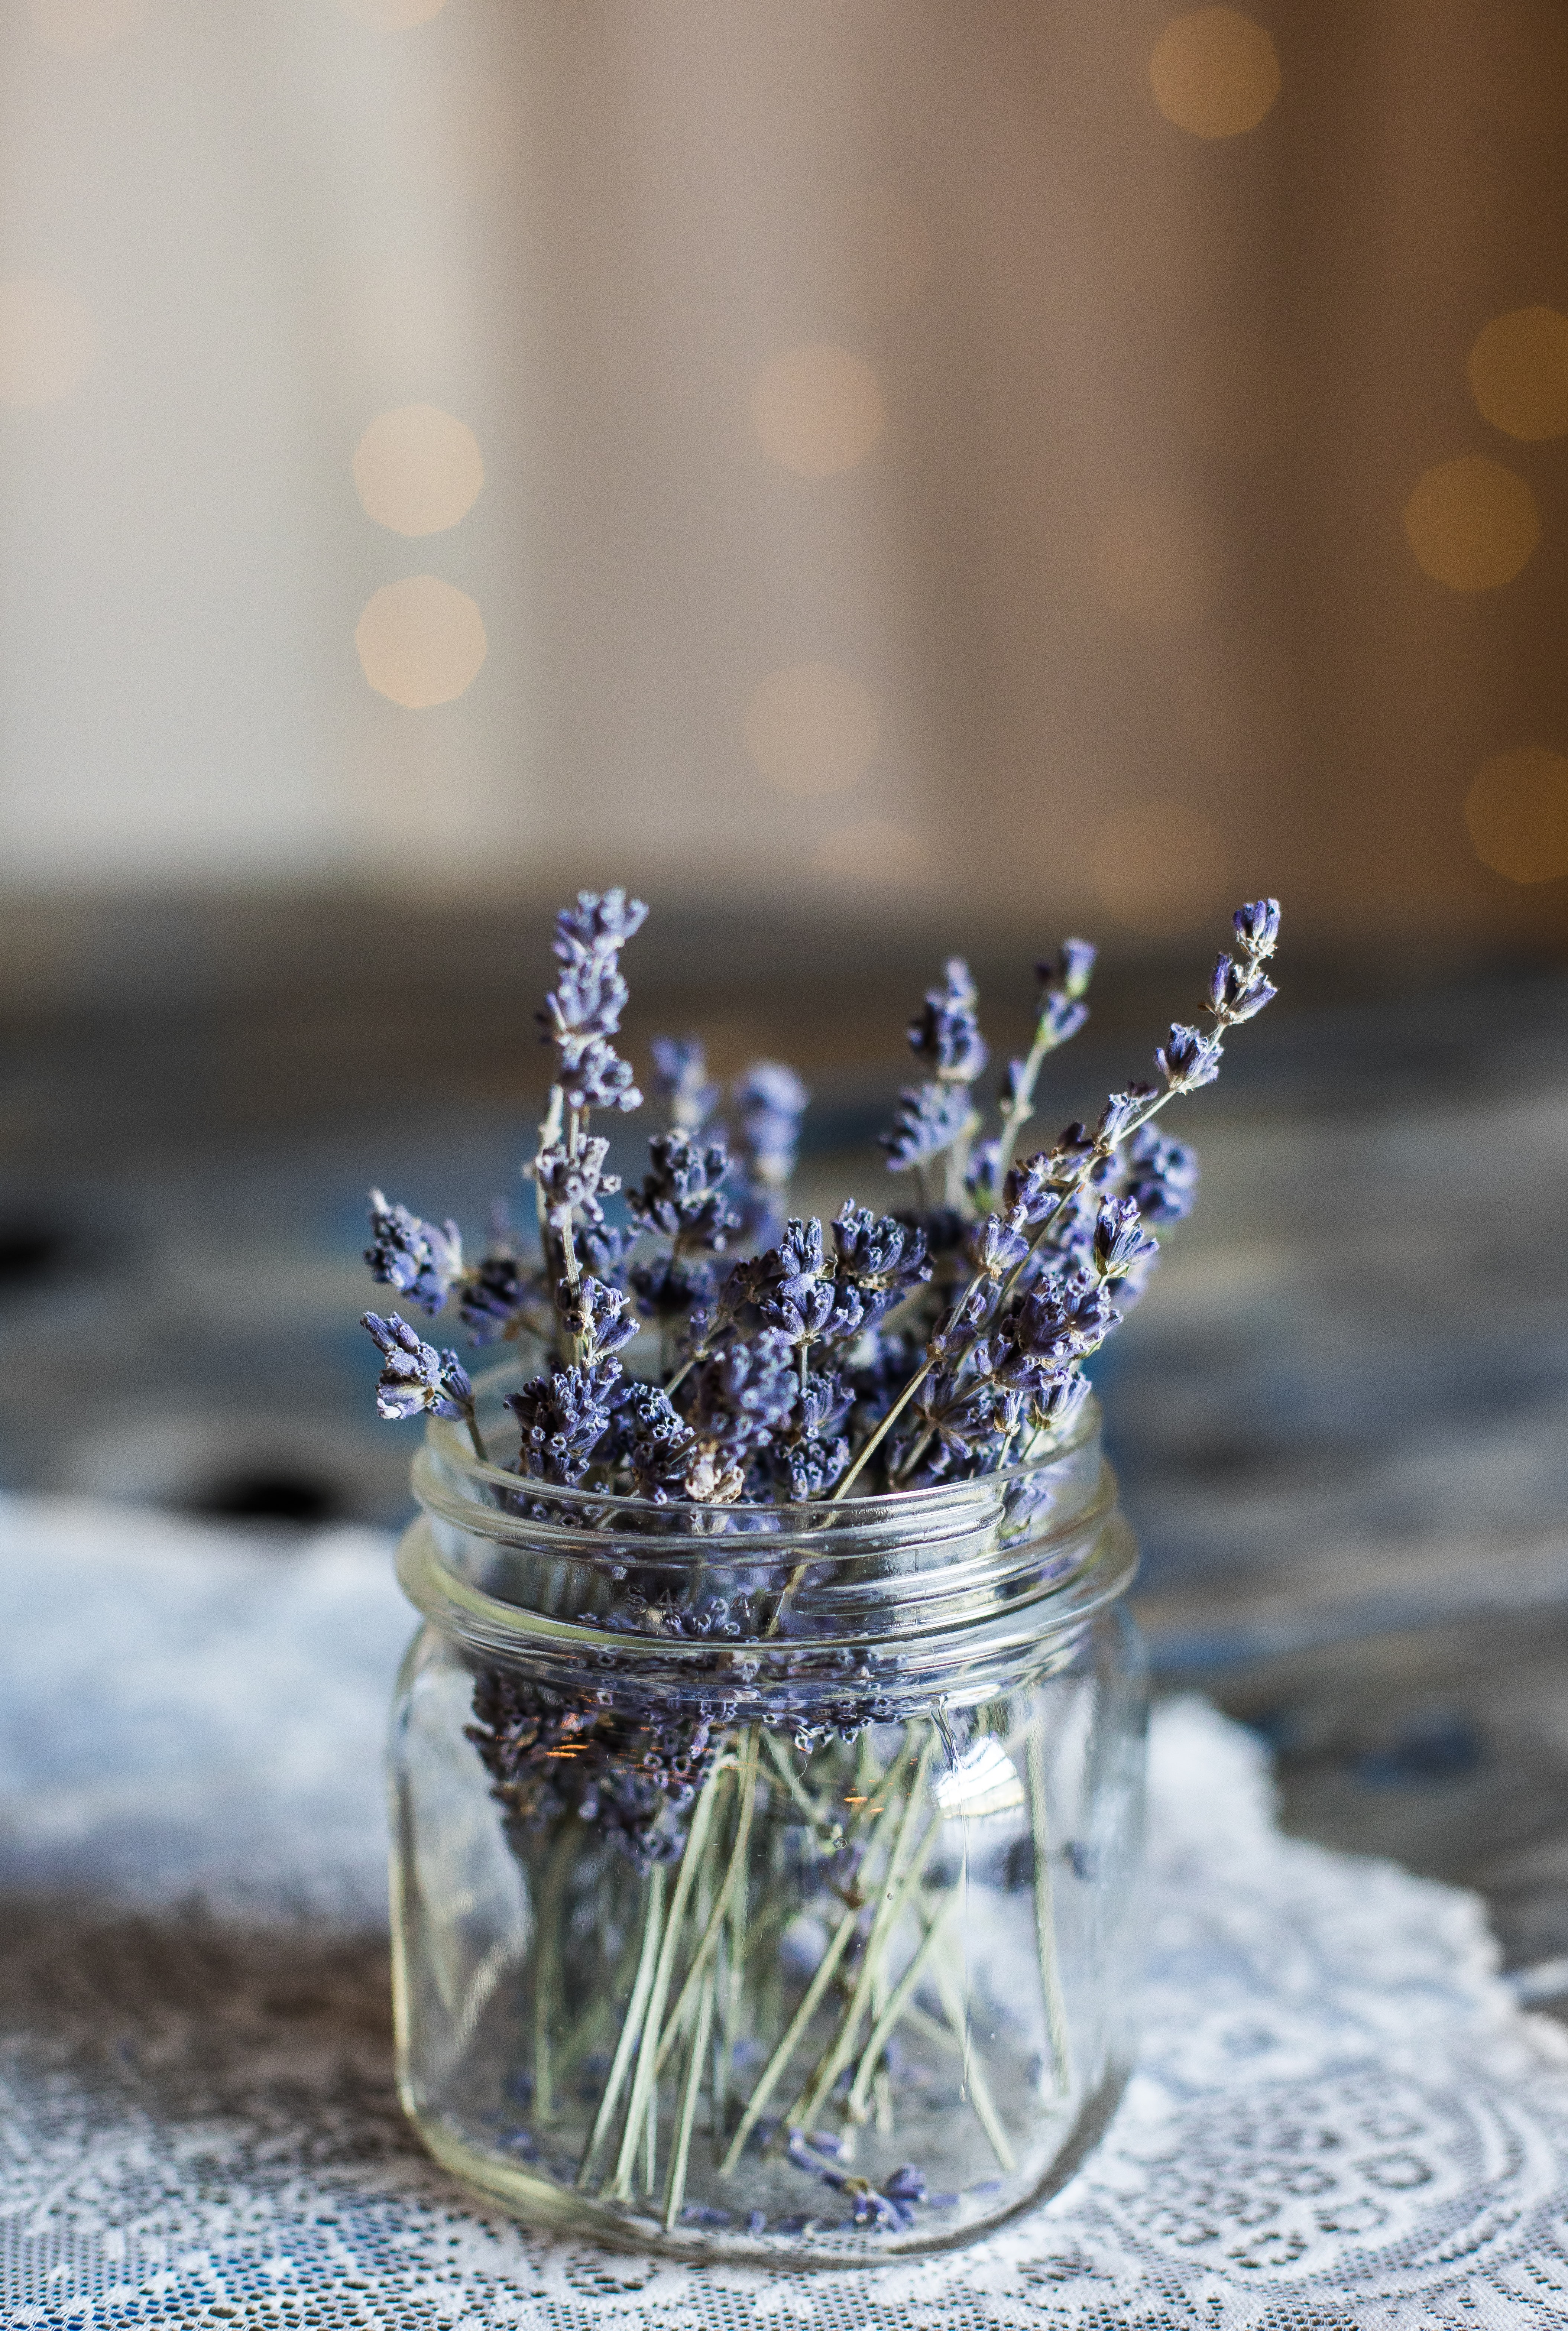 Dry Herbs Juniper Lavender Making Potions Stock Photo 1548713369